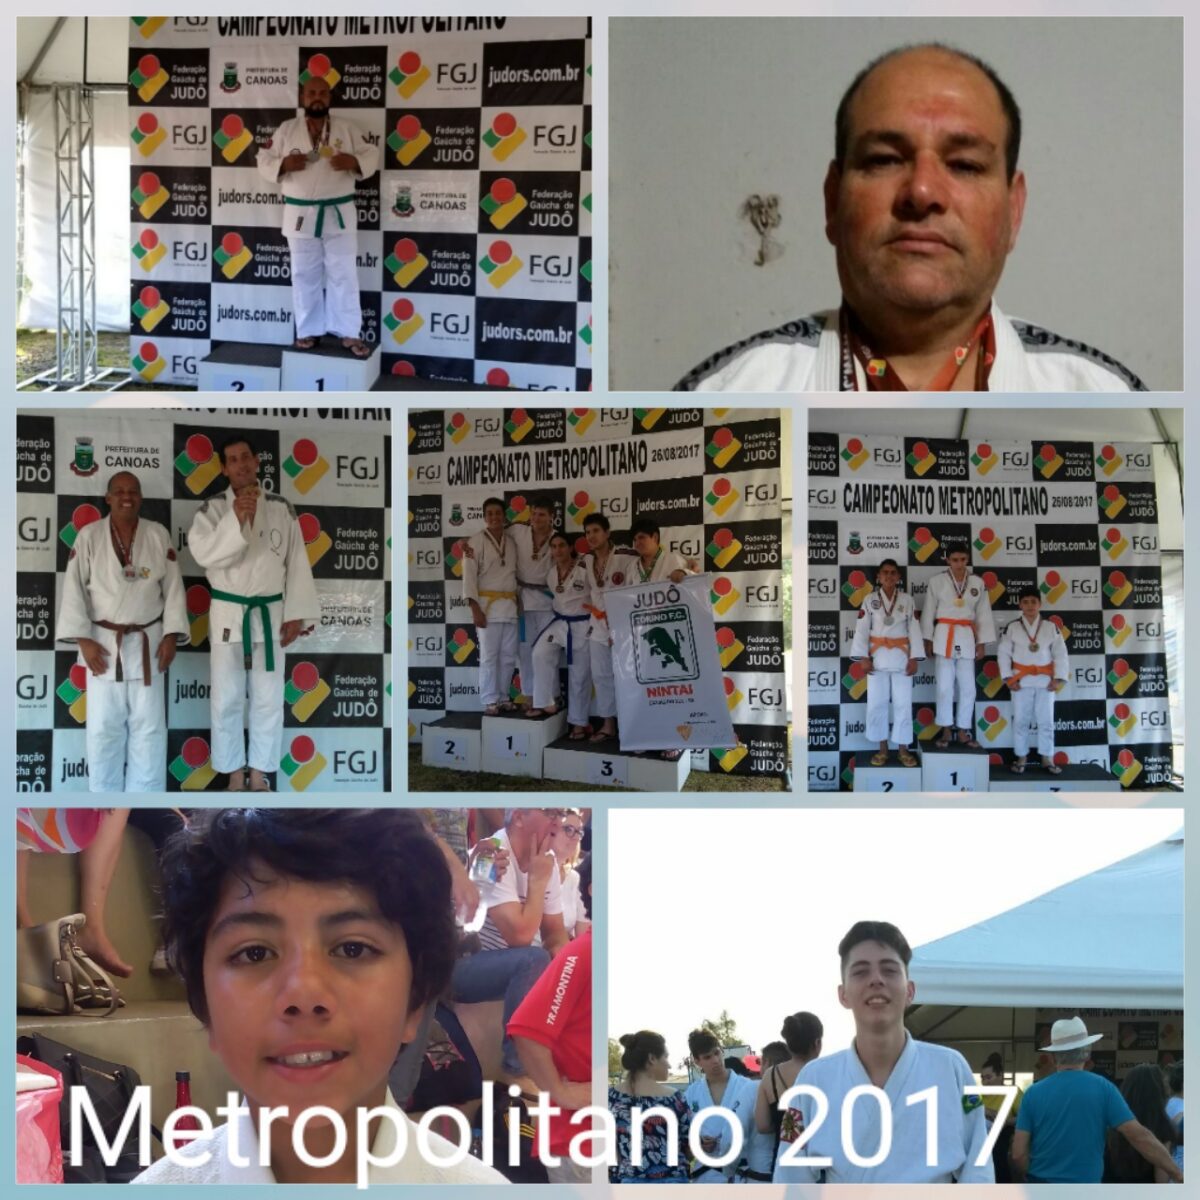 Judô de Osório participa do Campeonato Metropolitano de Judô